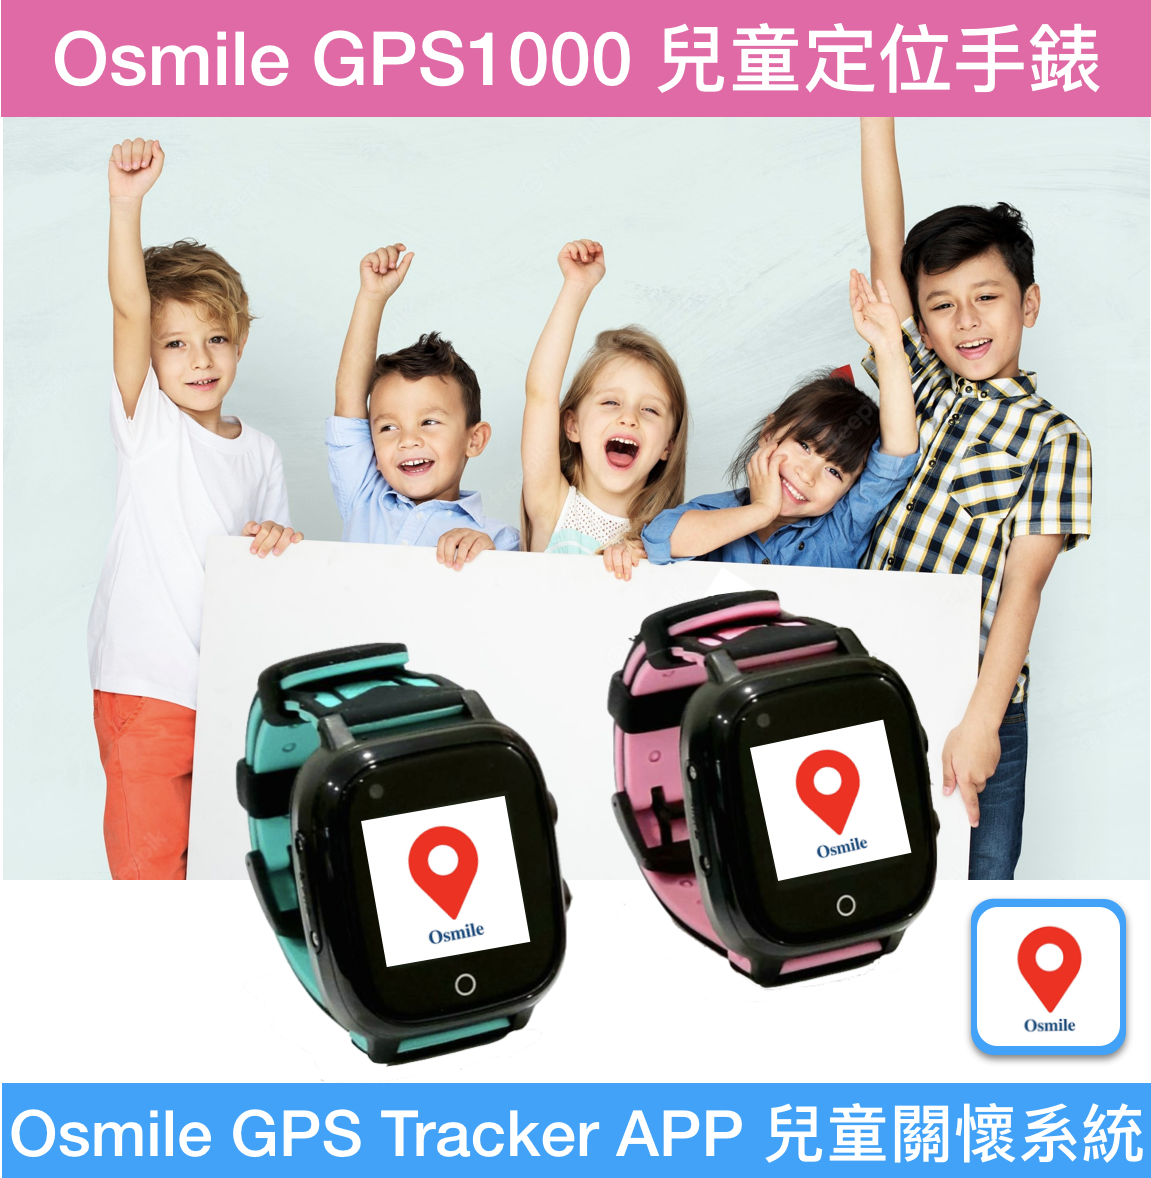 Osmile GPS1000 學校兒童GPS定位SOS求救系統手錶